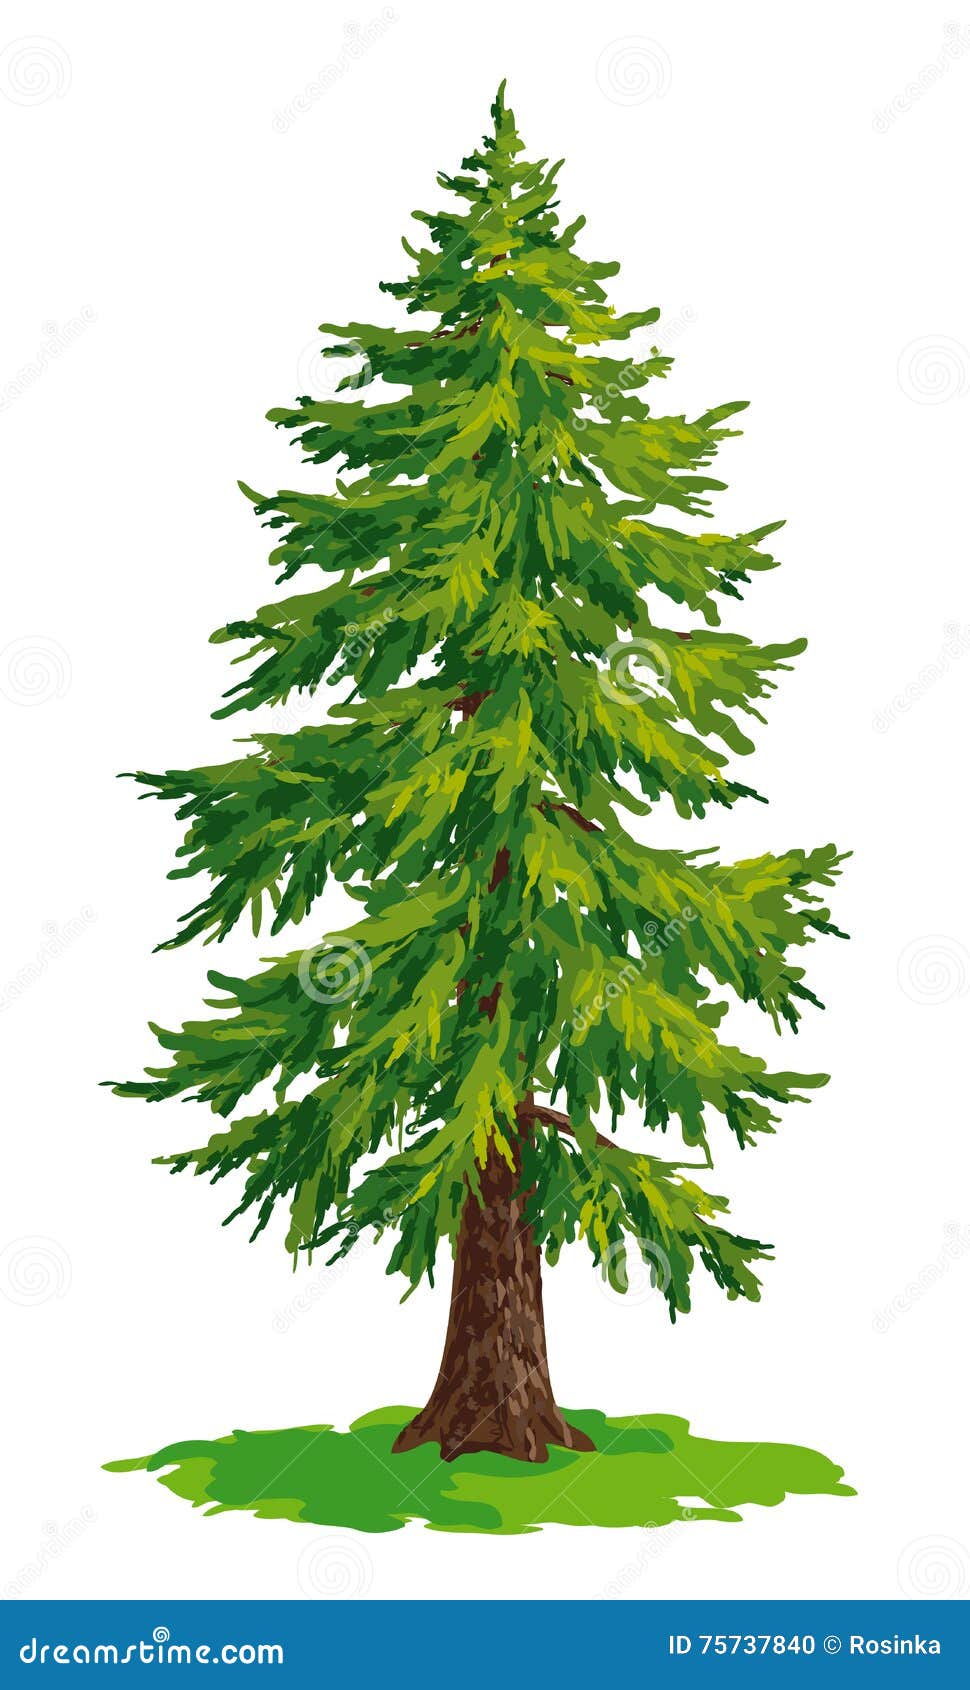 Vector drawing of fir tree stock vector. Illustration of straight